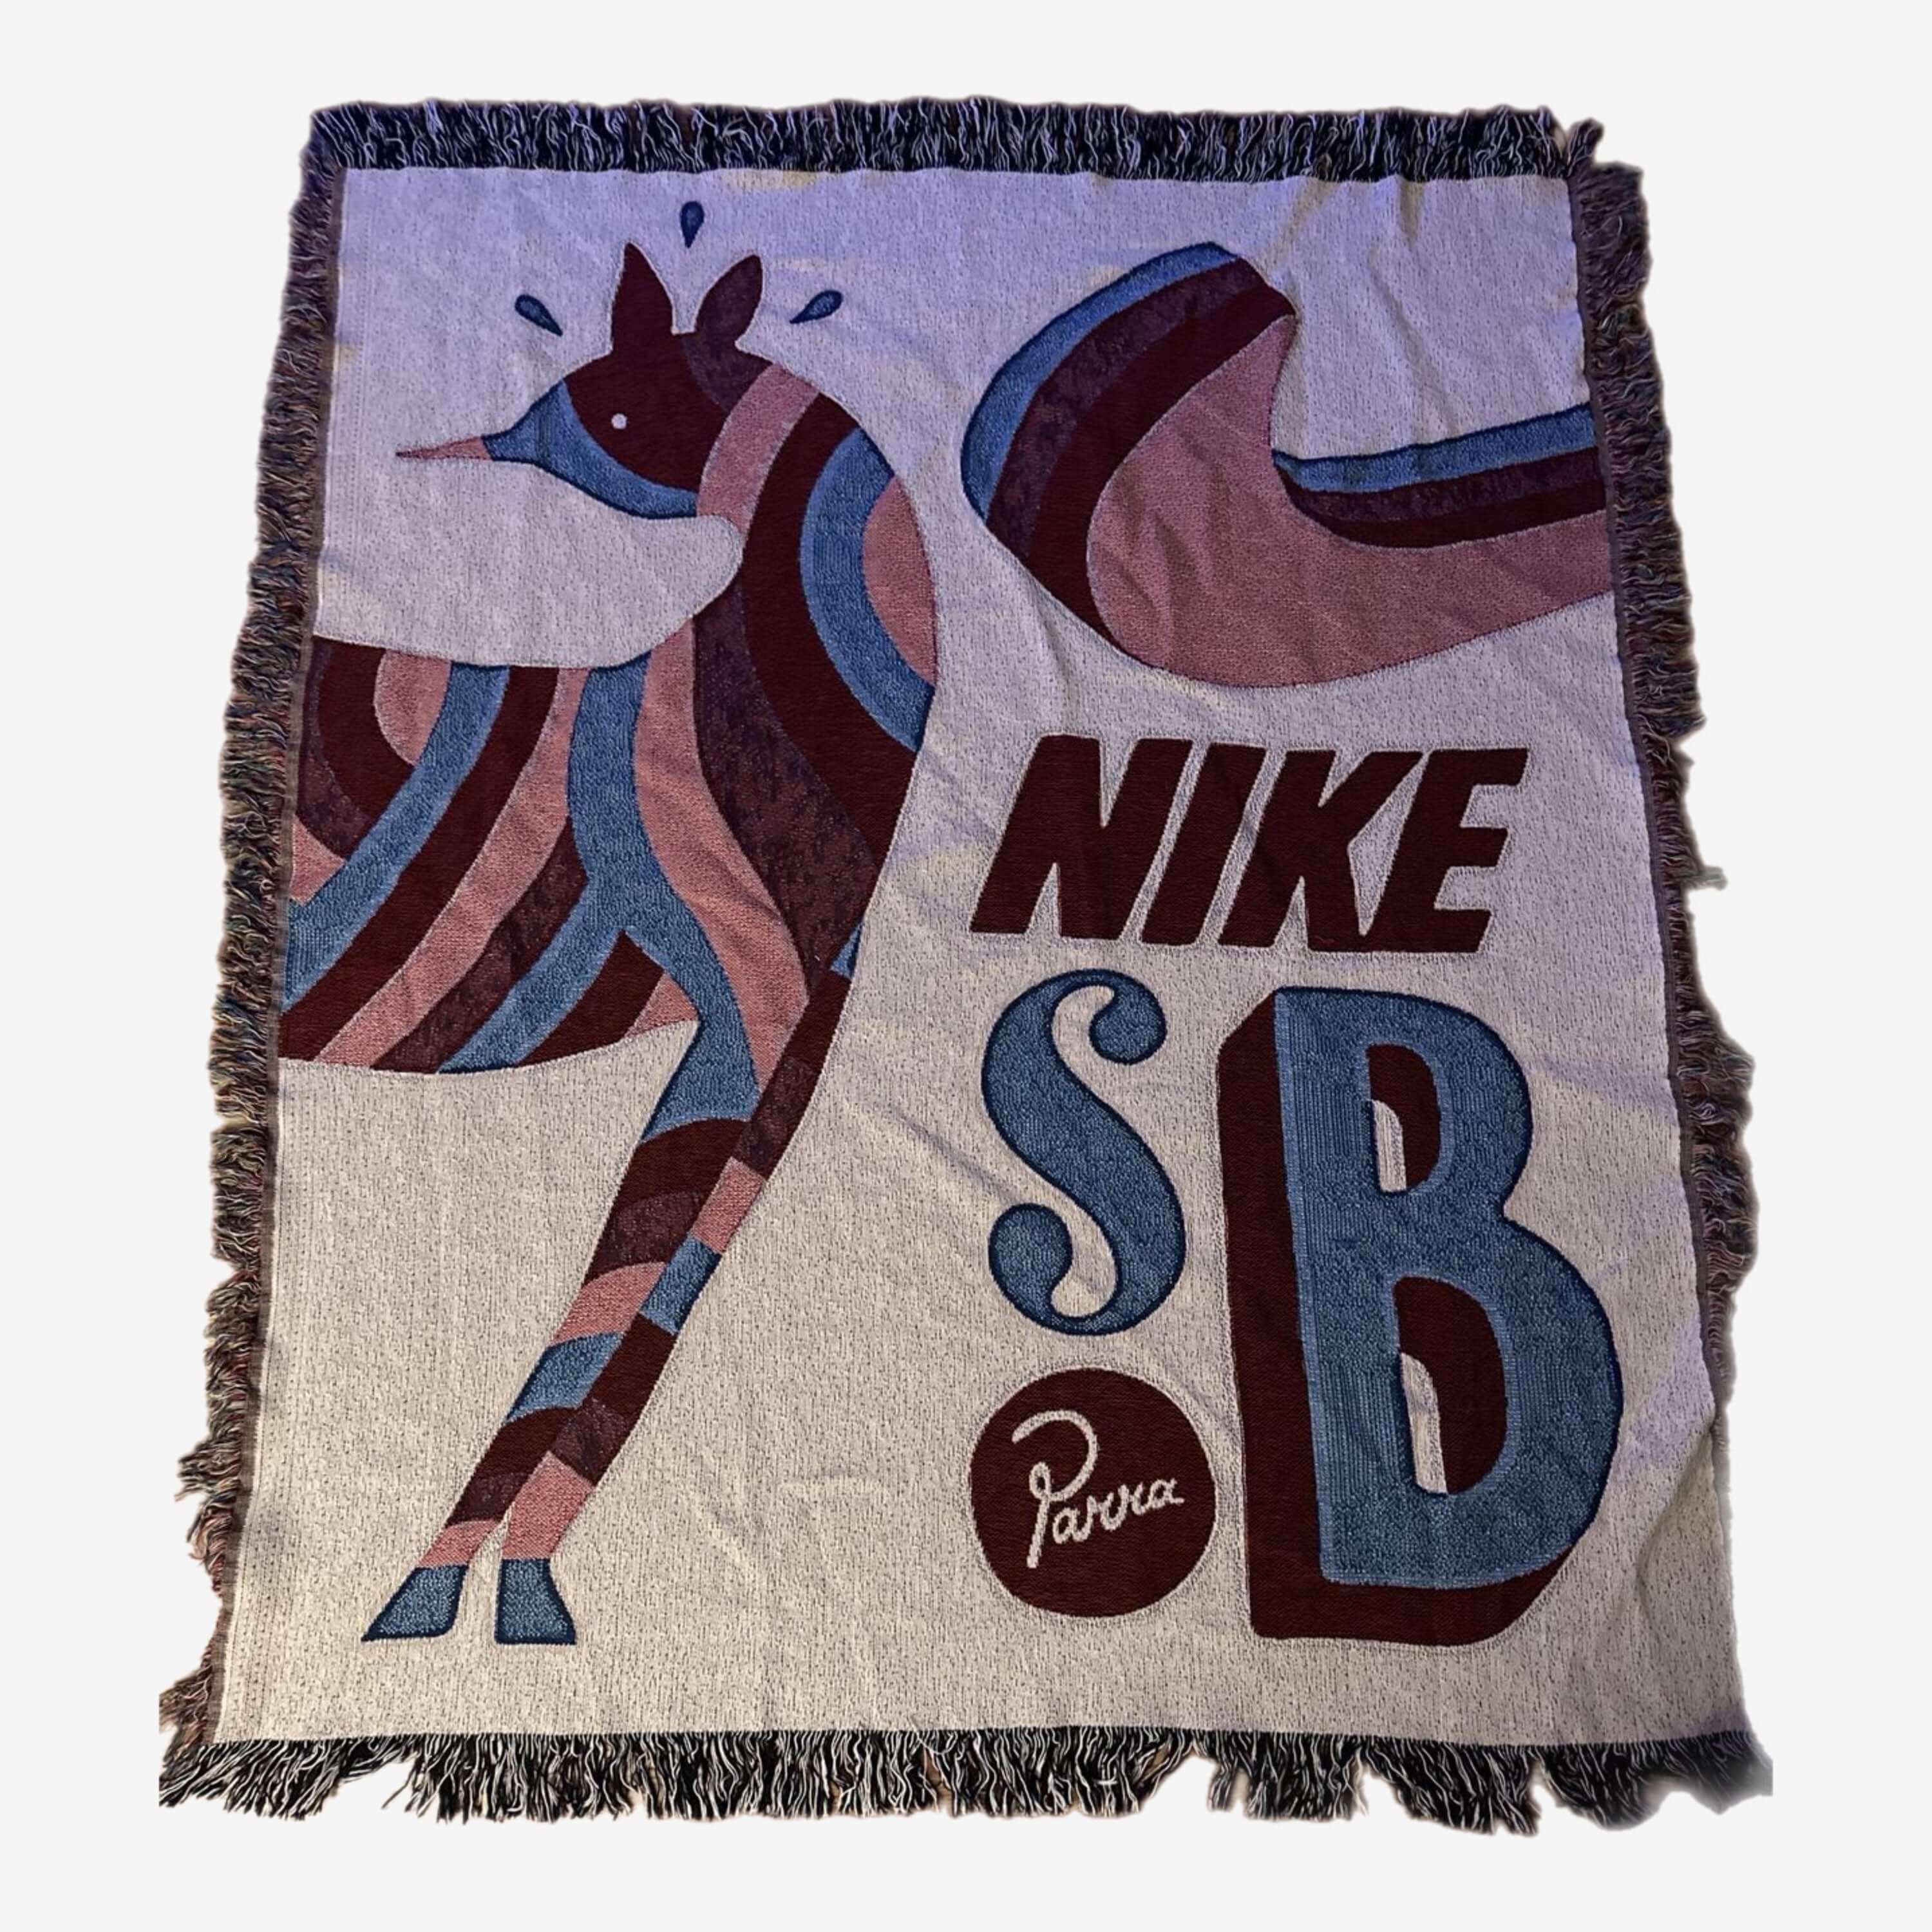 Parra x Nike SB Skate Shop Blanket (Friends & Family)